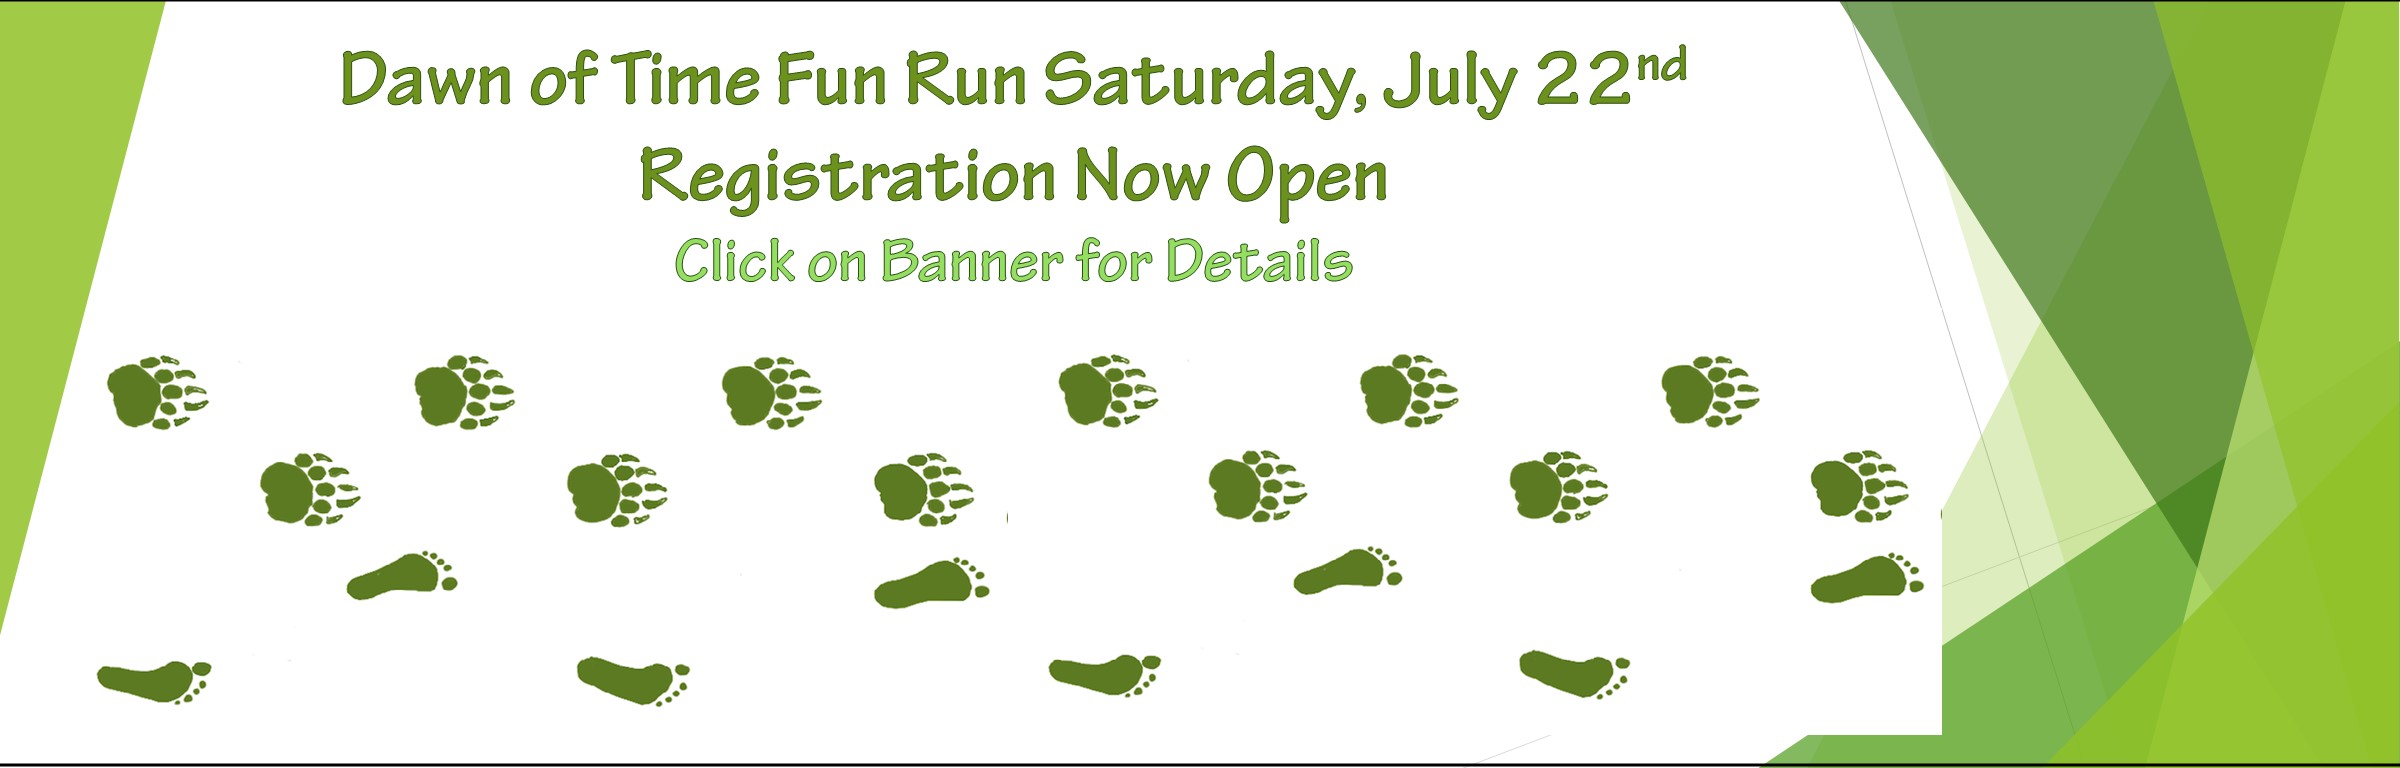 Run Registration Open